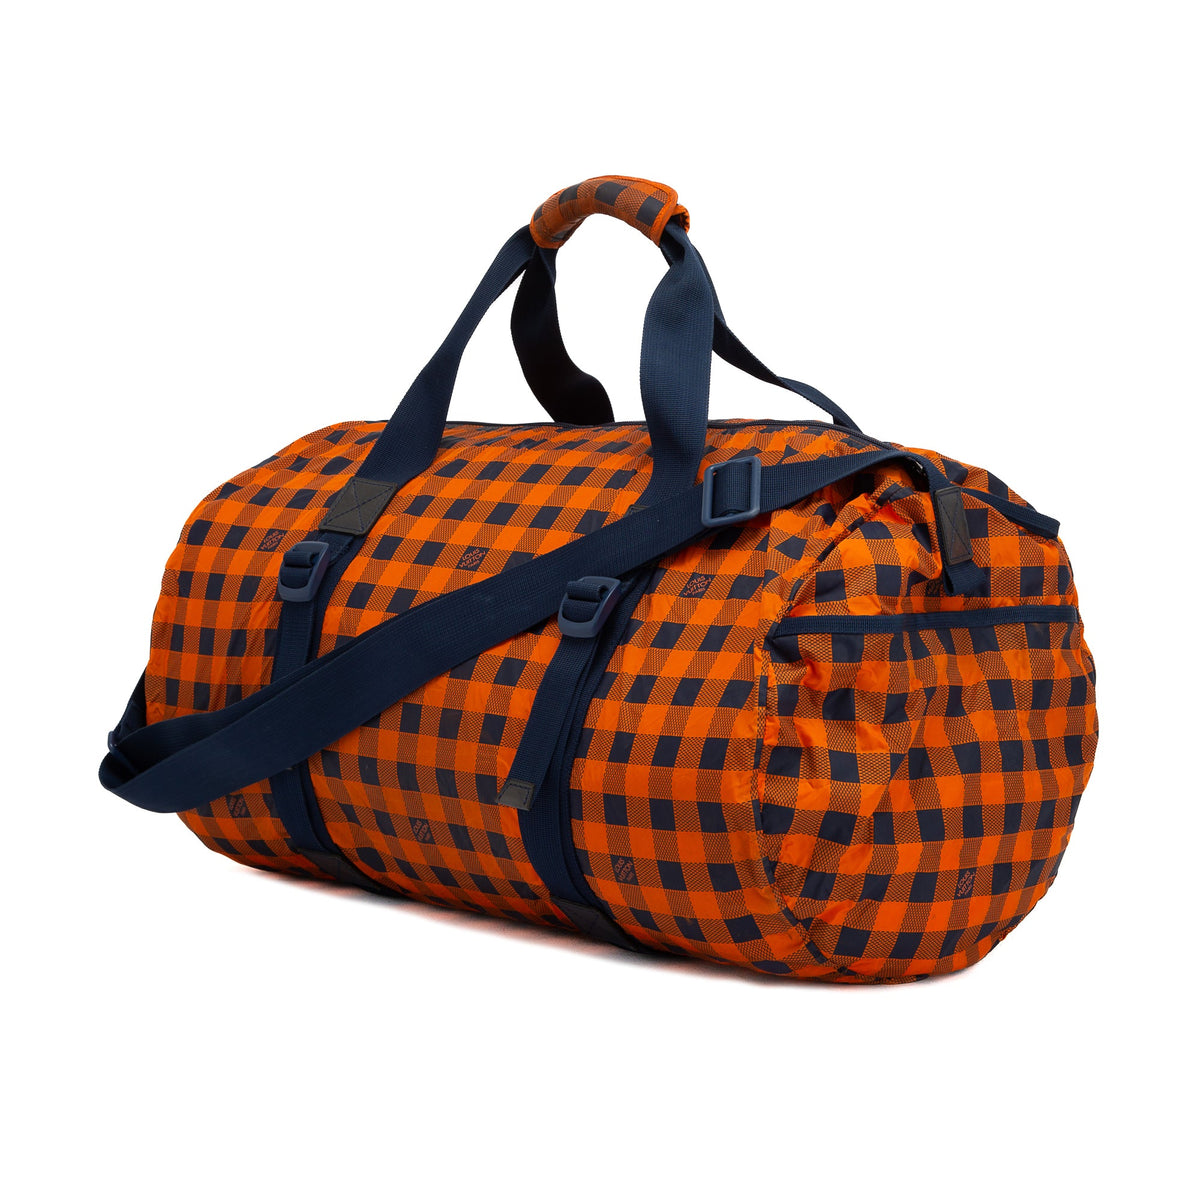 The Adventure Practical Damier Nylon Duffel Bag